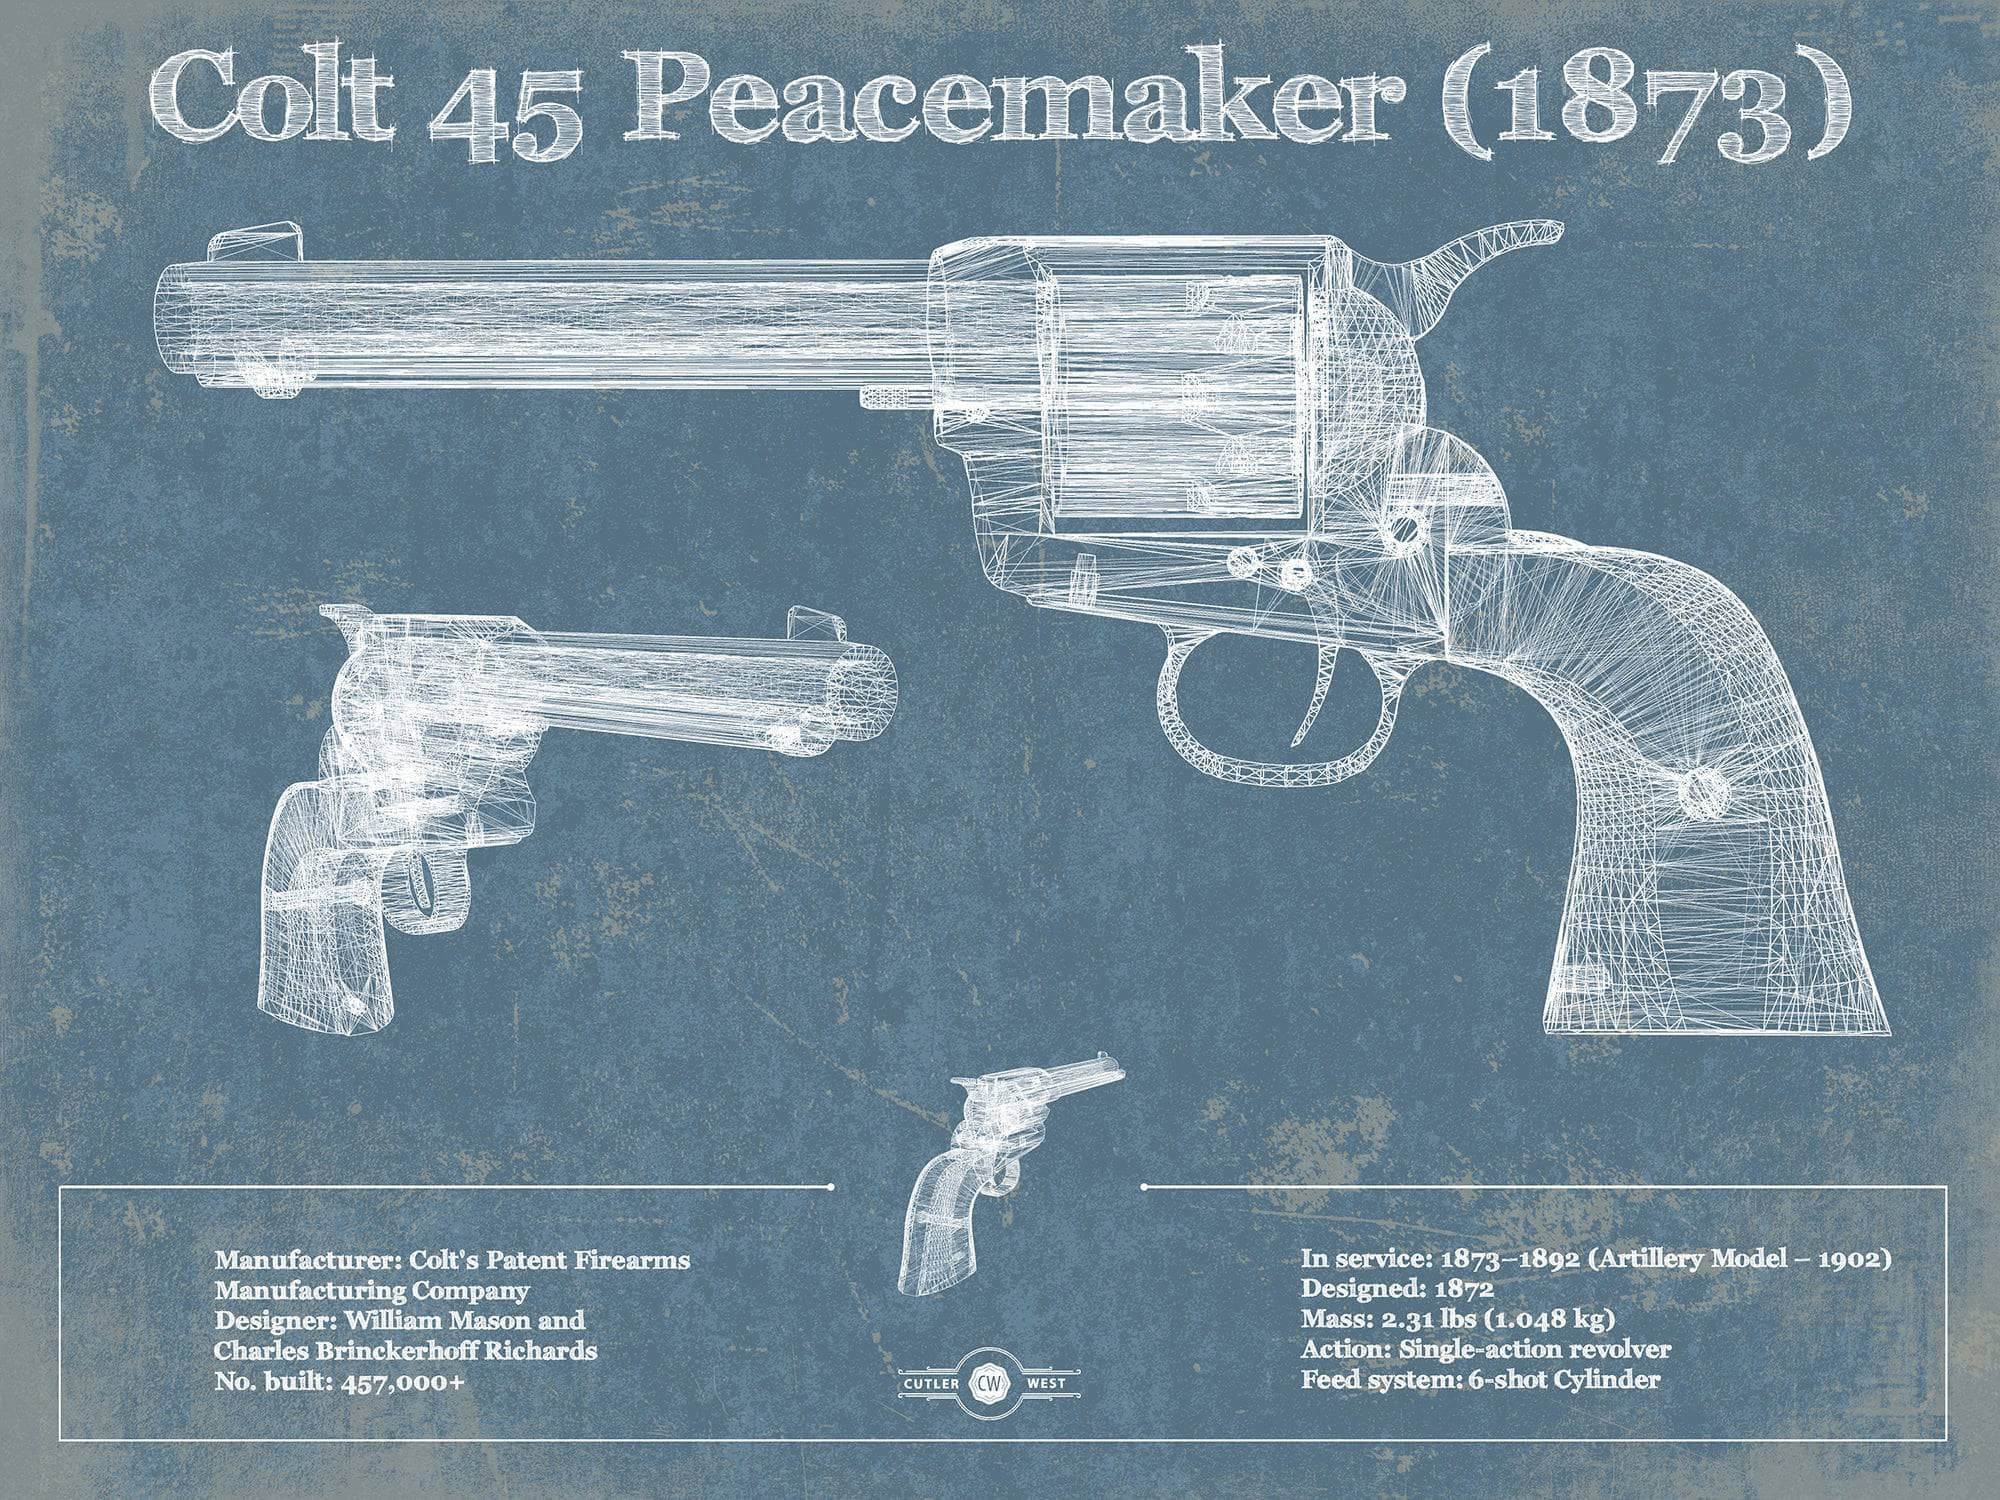 Cutler West Military Weapons Collection 14" x 11" / Unframed Colt 45 Peacemaker 1873 Blueprint Vintage Gun Print 892159293_54149